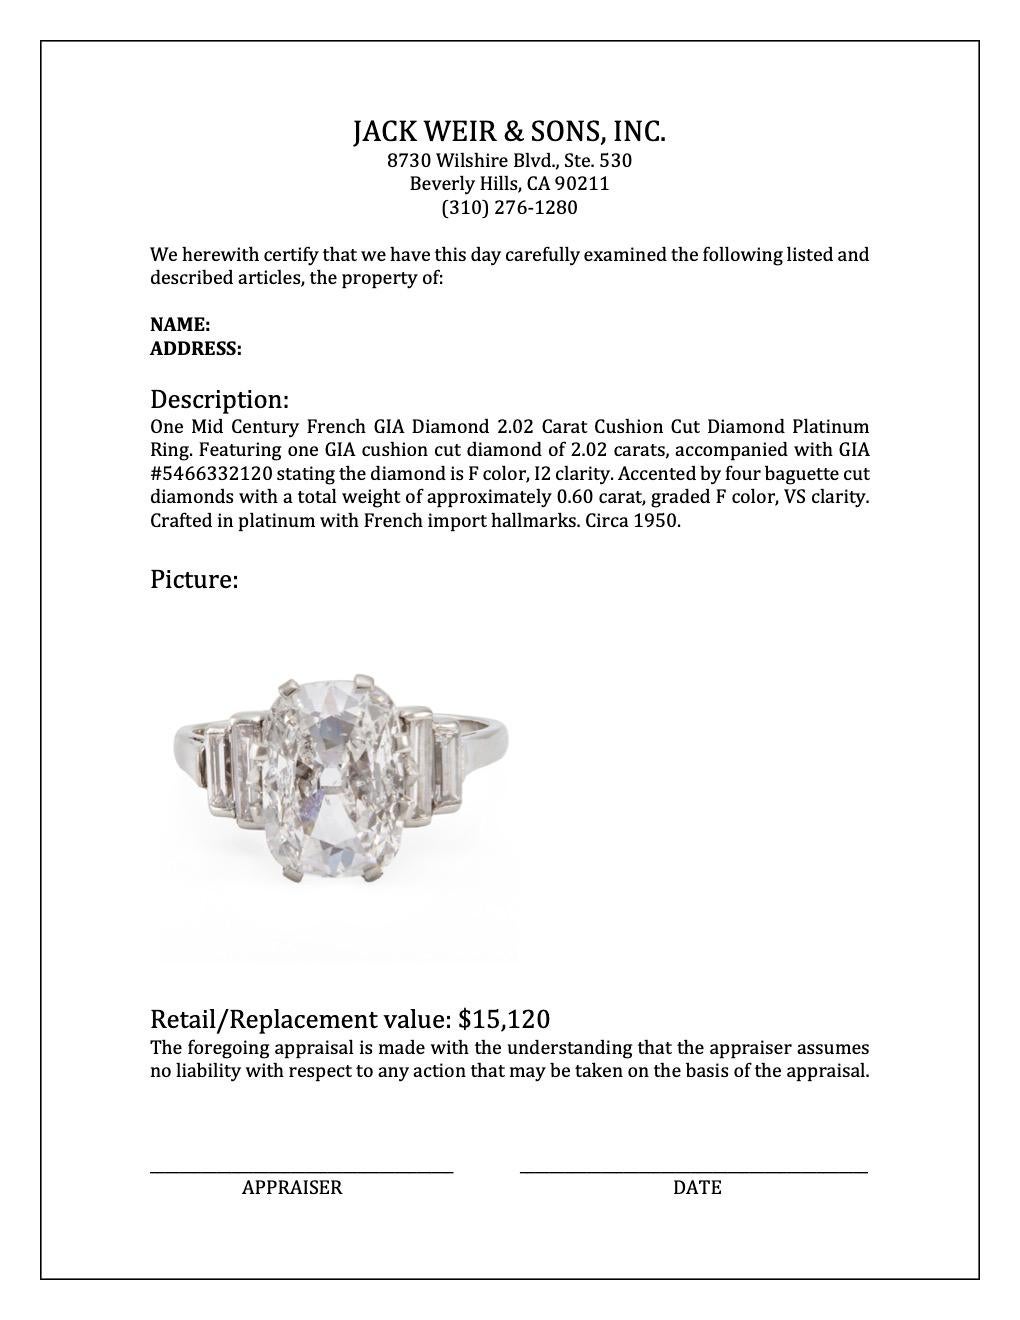 Mid Century French GIA Diamond 2.02 Carat Cushion Cut Diamond Platinum Ring 3